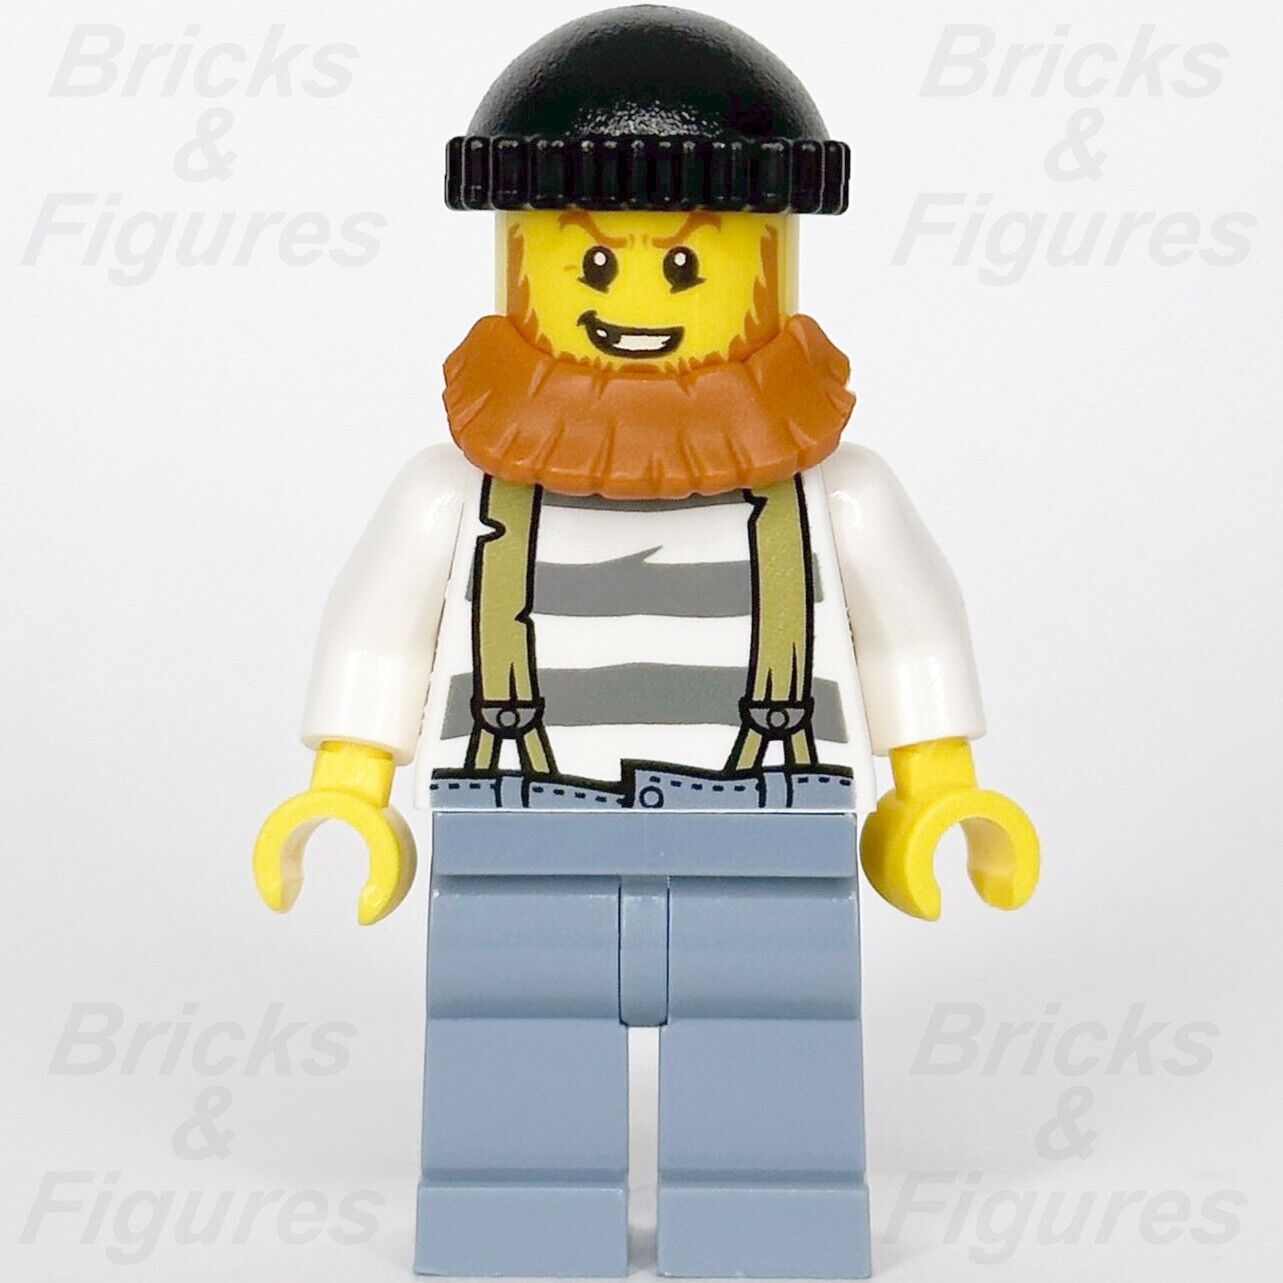 LEGO Town City Crook with Black Knit Cap Minifigure Orange Beard Police 60066 - Bricks & Figures